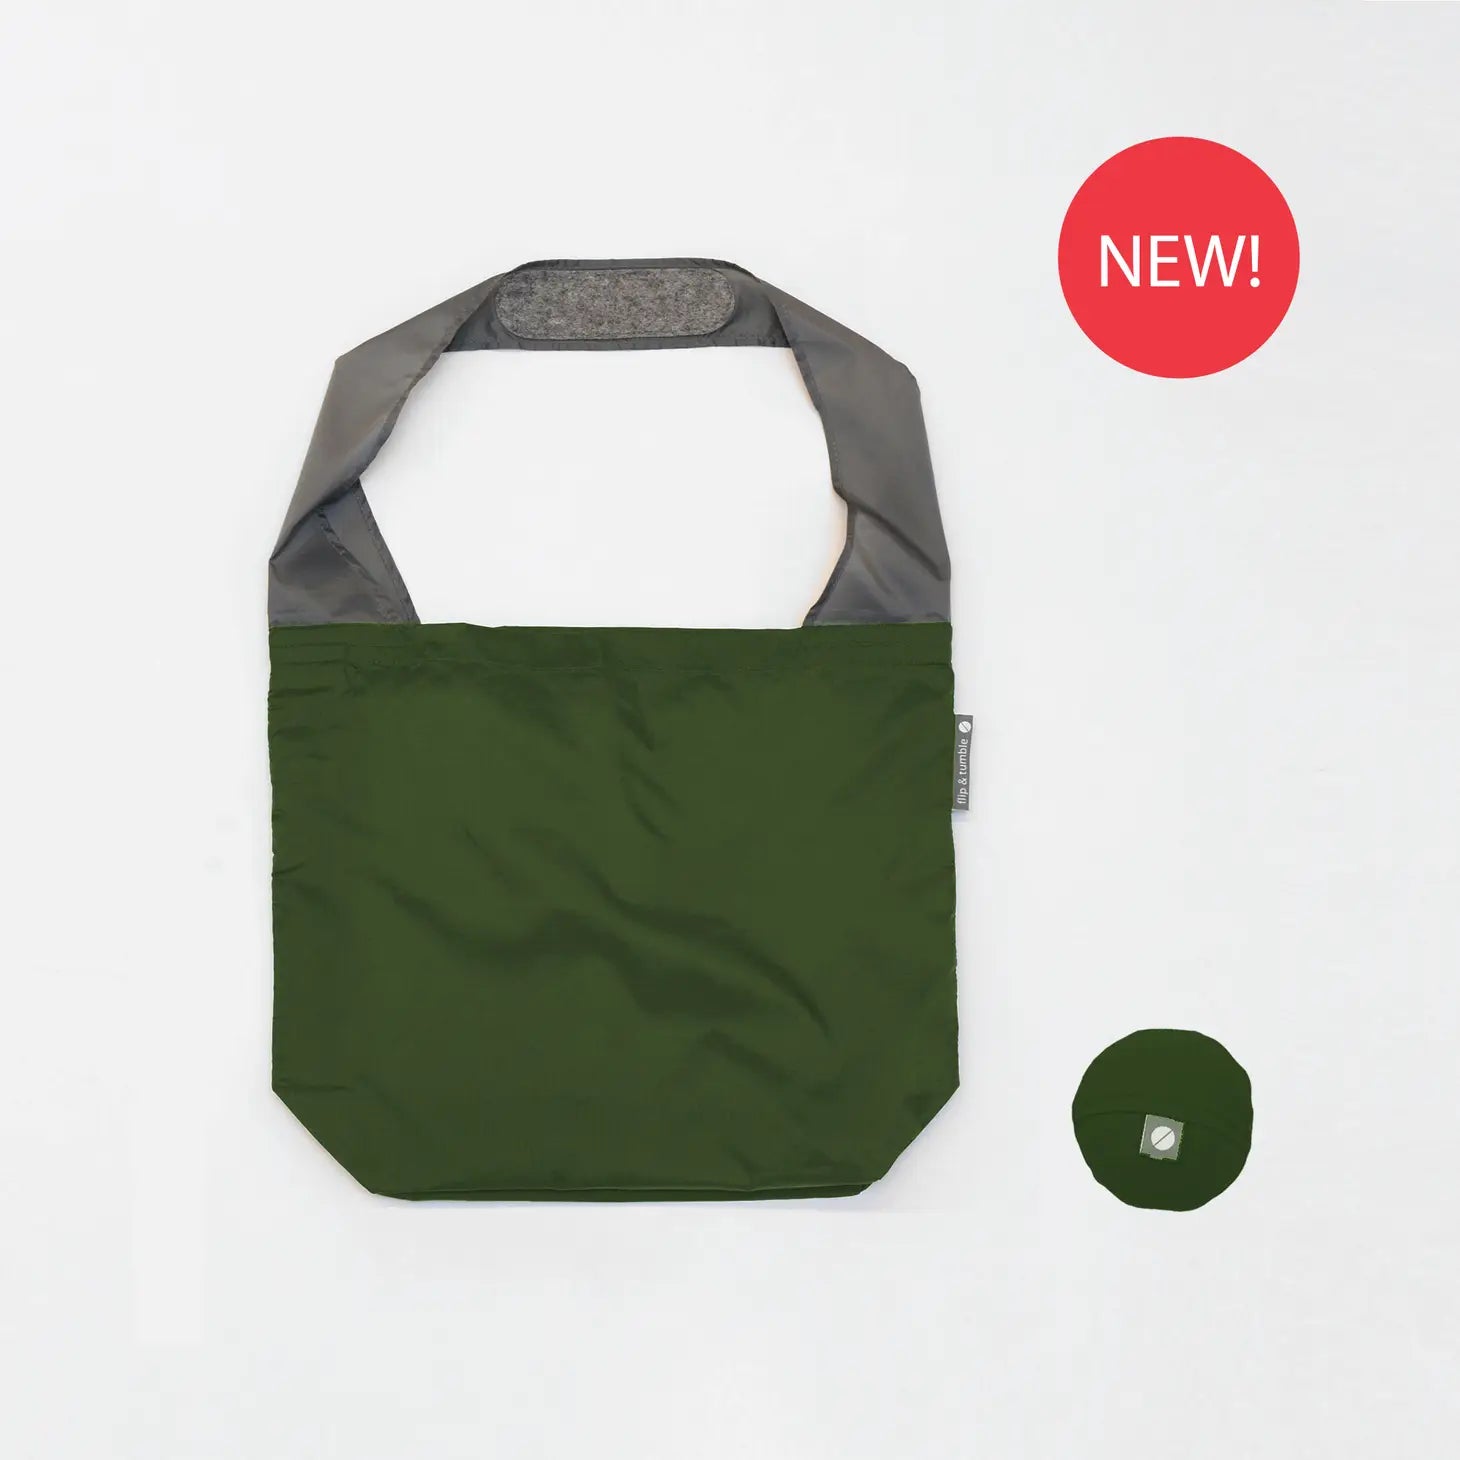 Flip & Tumble Reusable Bag - Deep Green